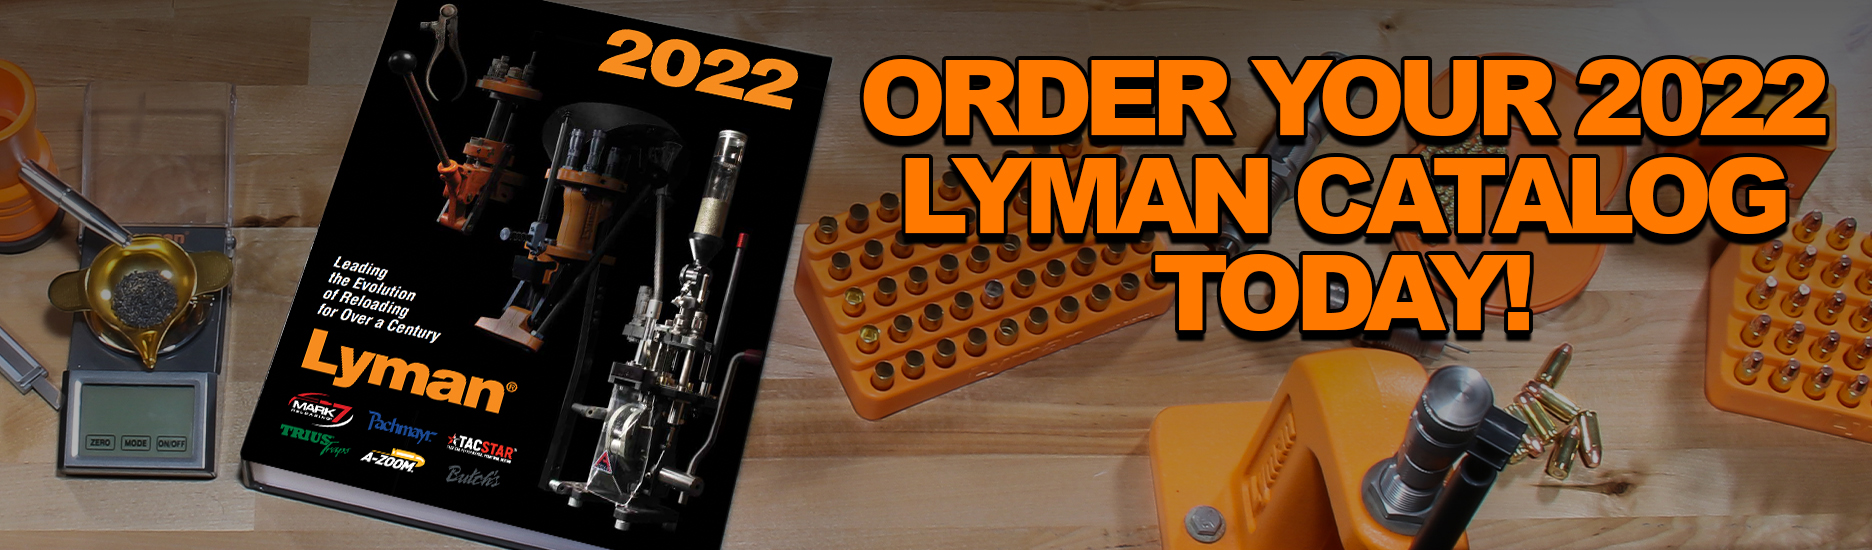 Order your 2022 Lyman catalog